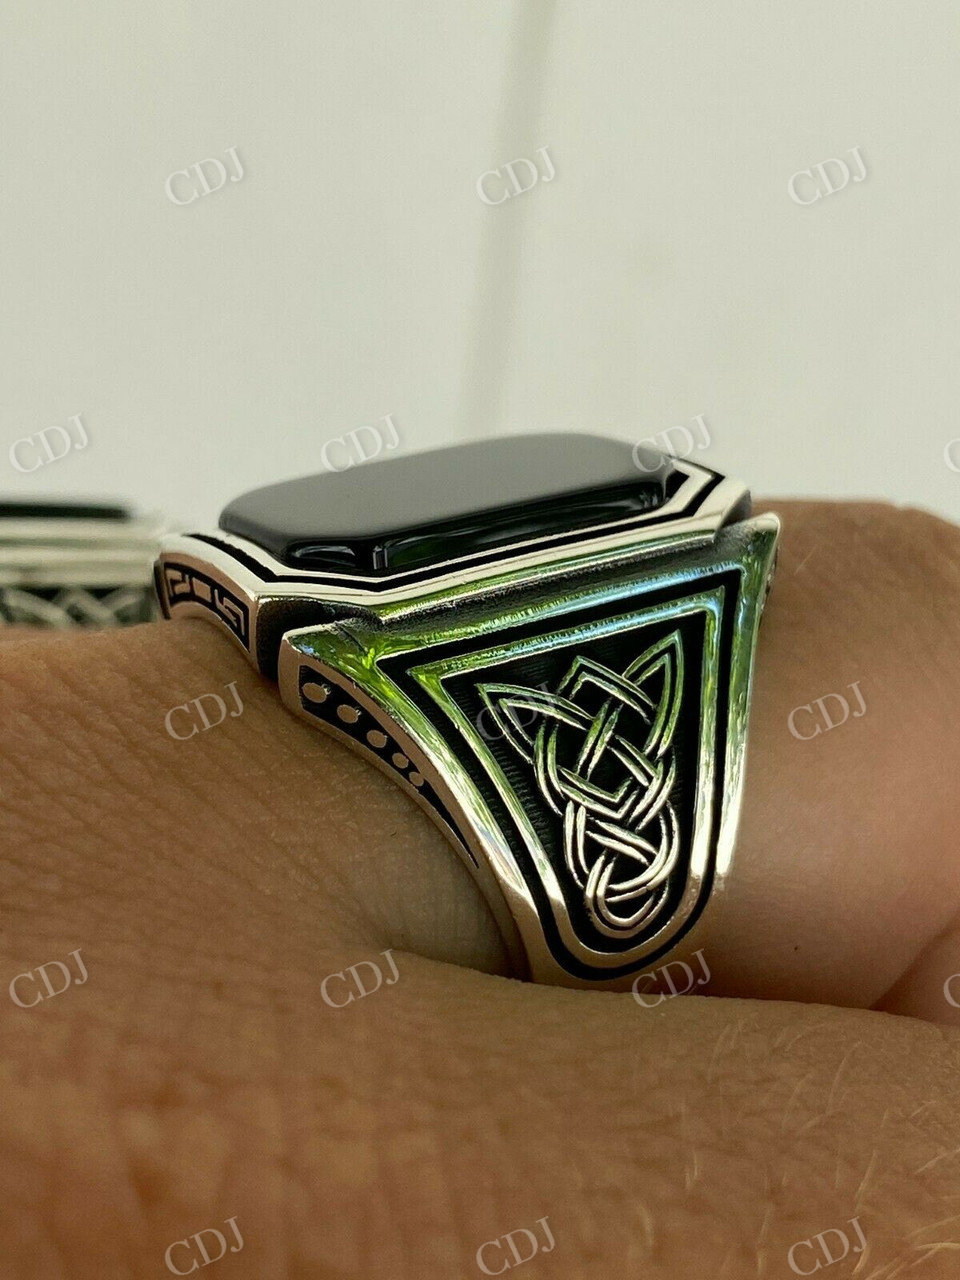 Solid Gold Black Diamond Signet Ring  customdiamjewel   